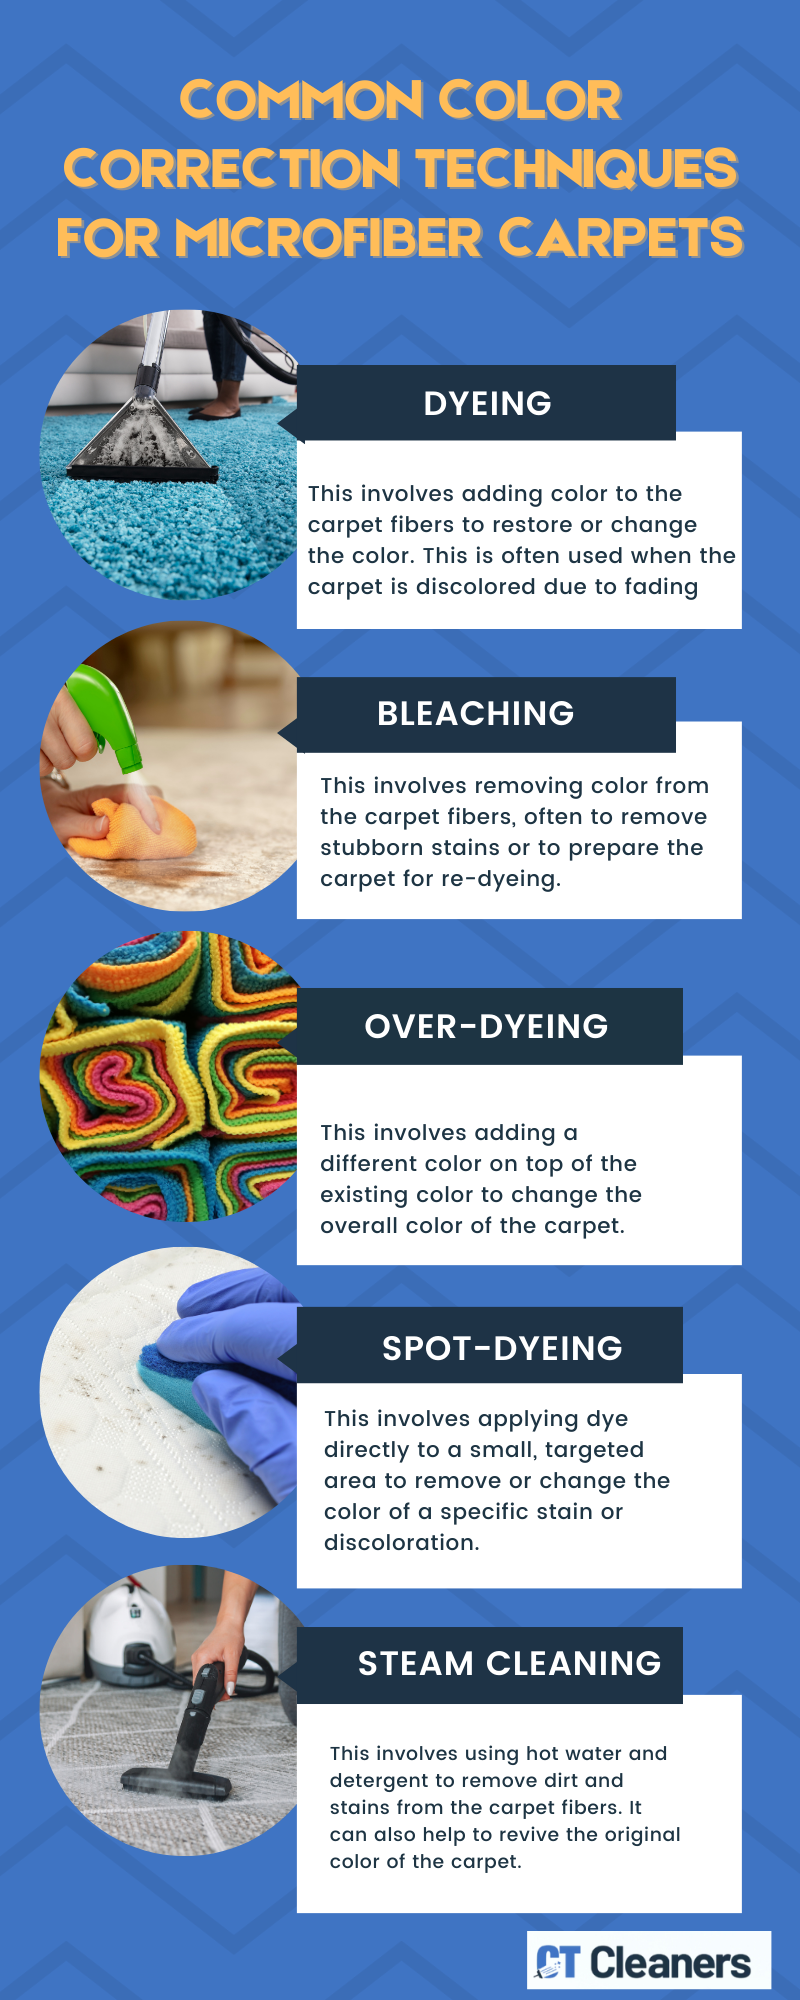 Common Color Correction Techniques for Microfiber Carpets